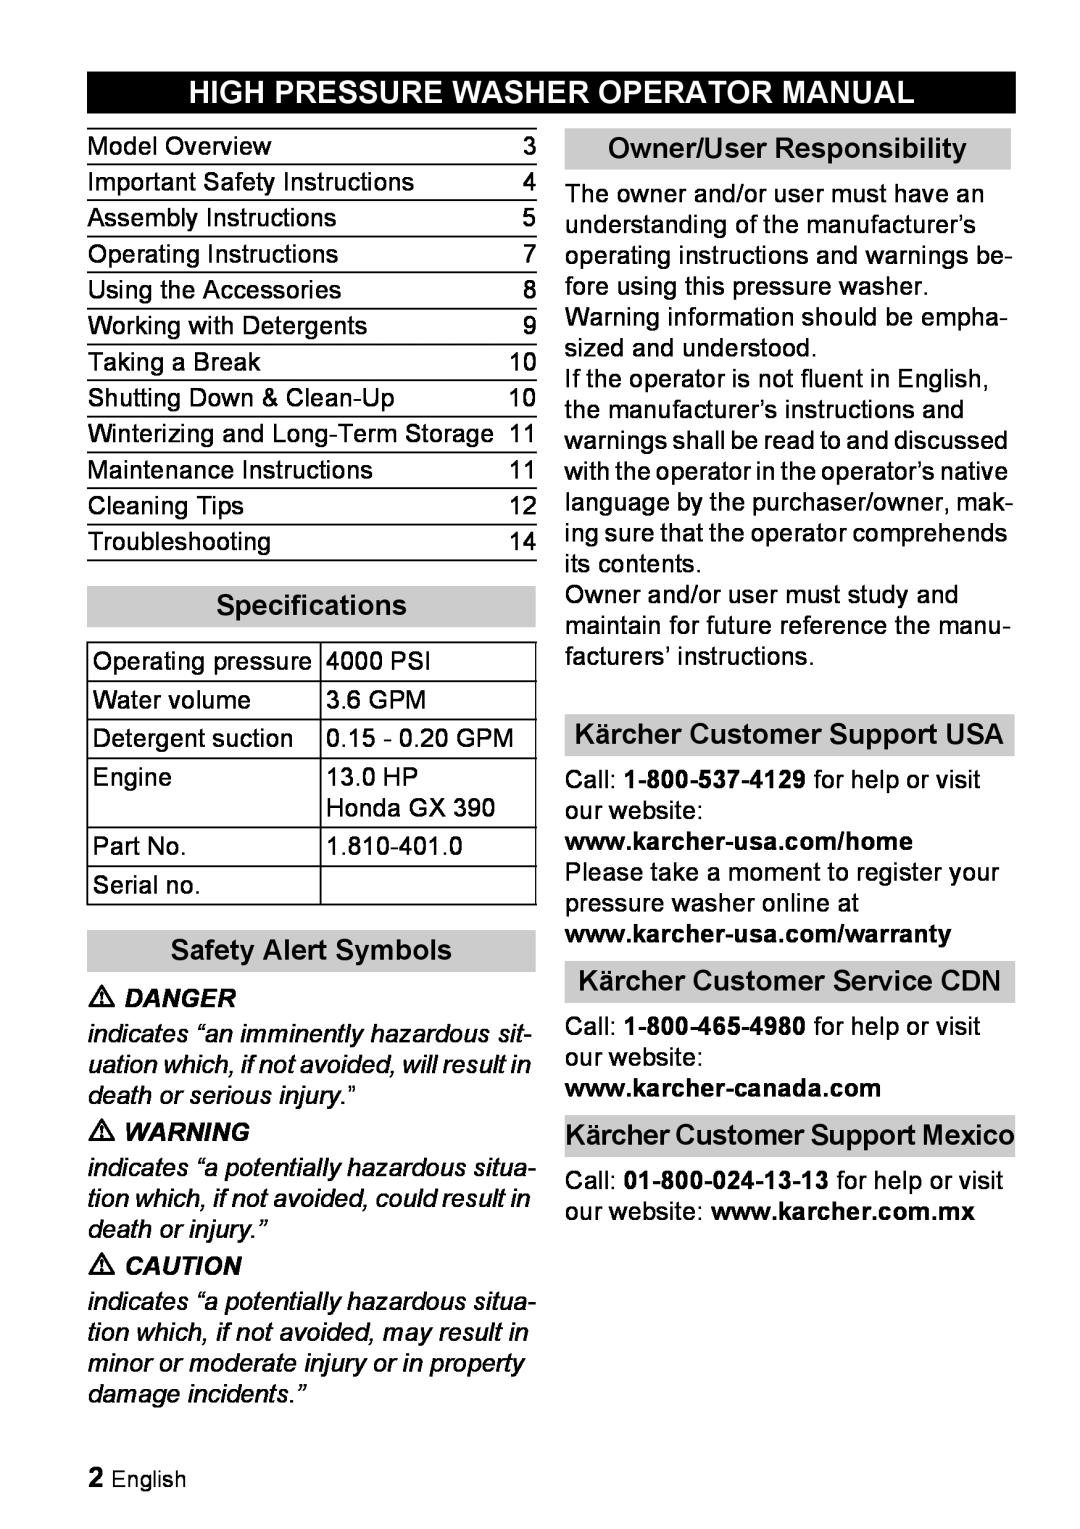 Karcher G 4000 RH High Pressure Washer Operator Manual, Specifications, Safety Alert Symbols, Owner/User Responsibility 